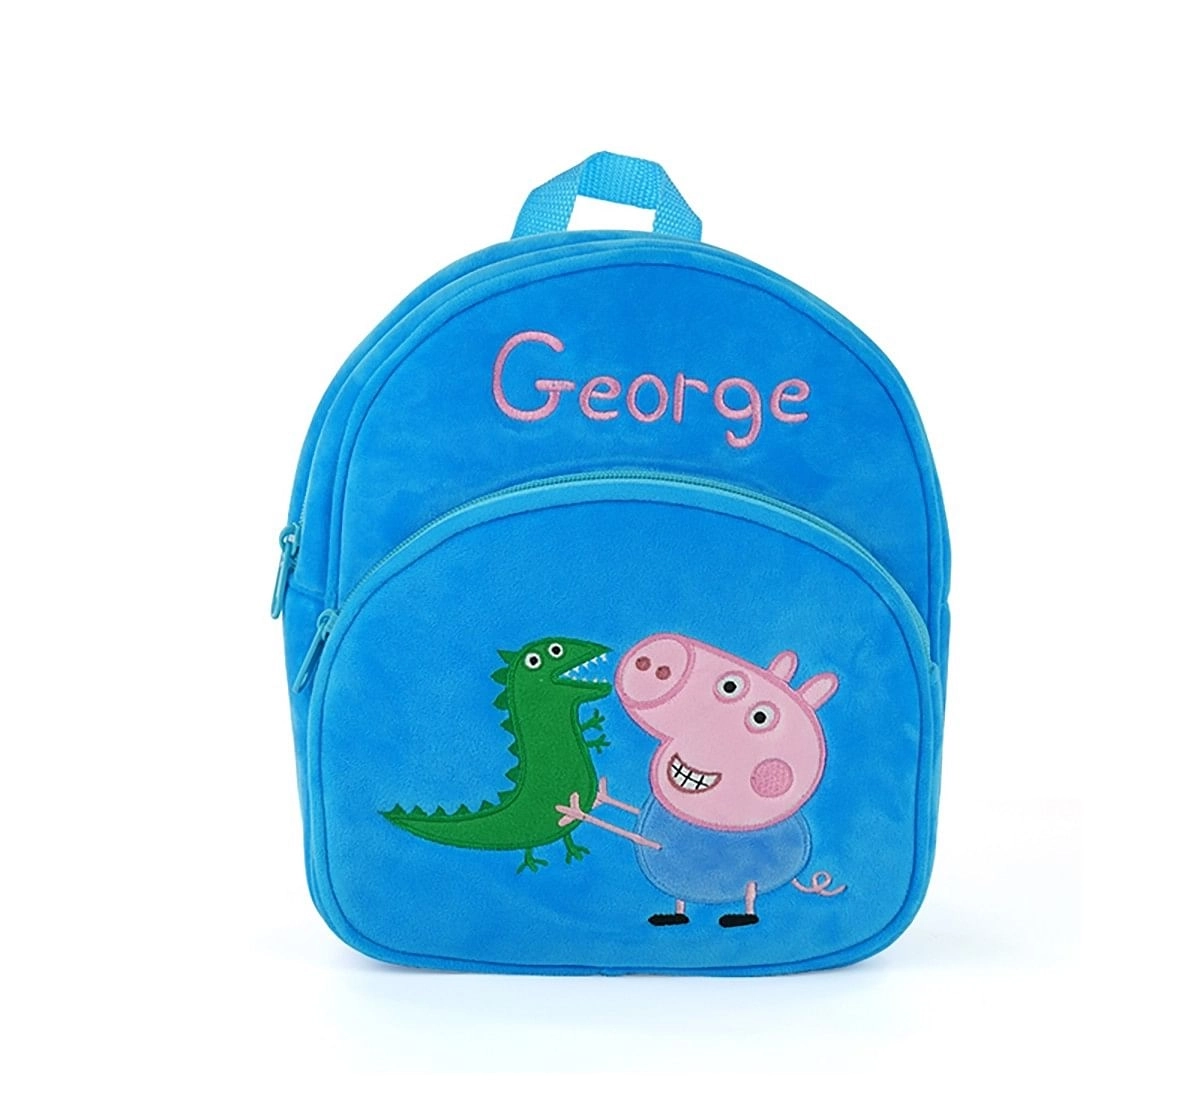 Peppa Pig George Bag Plush Accessory for Kids age 1Y+ - 28 Cm (Blue)